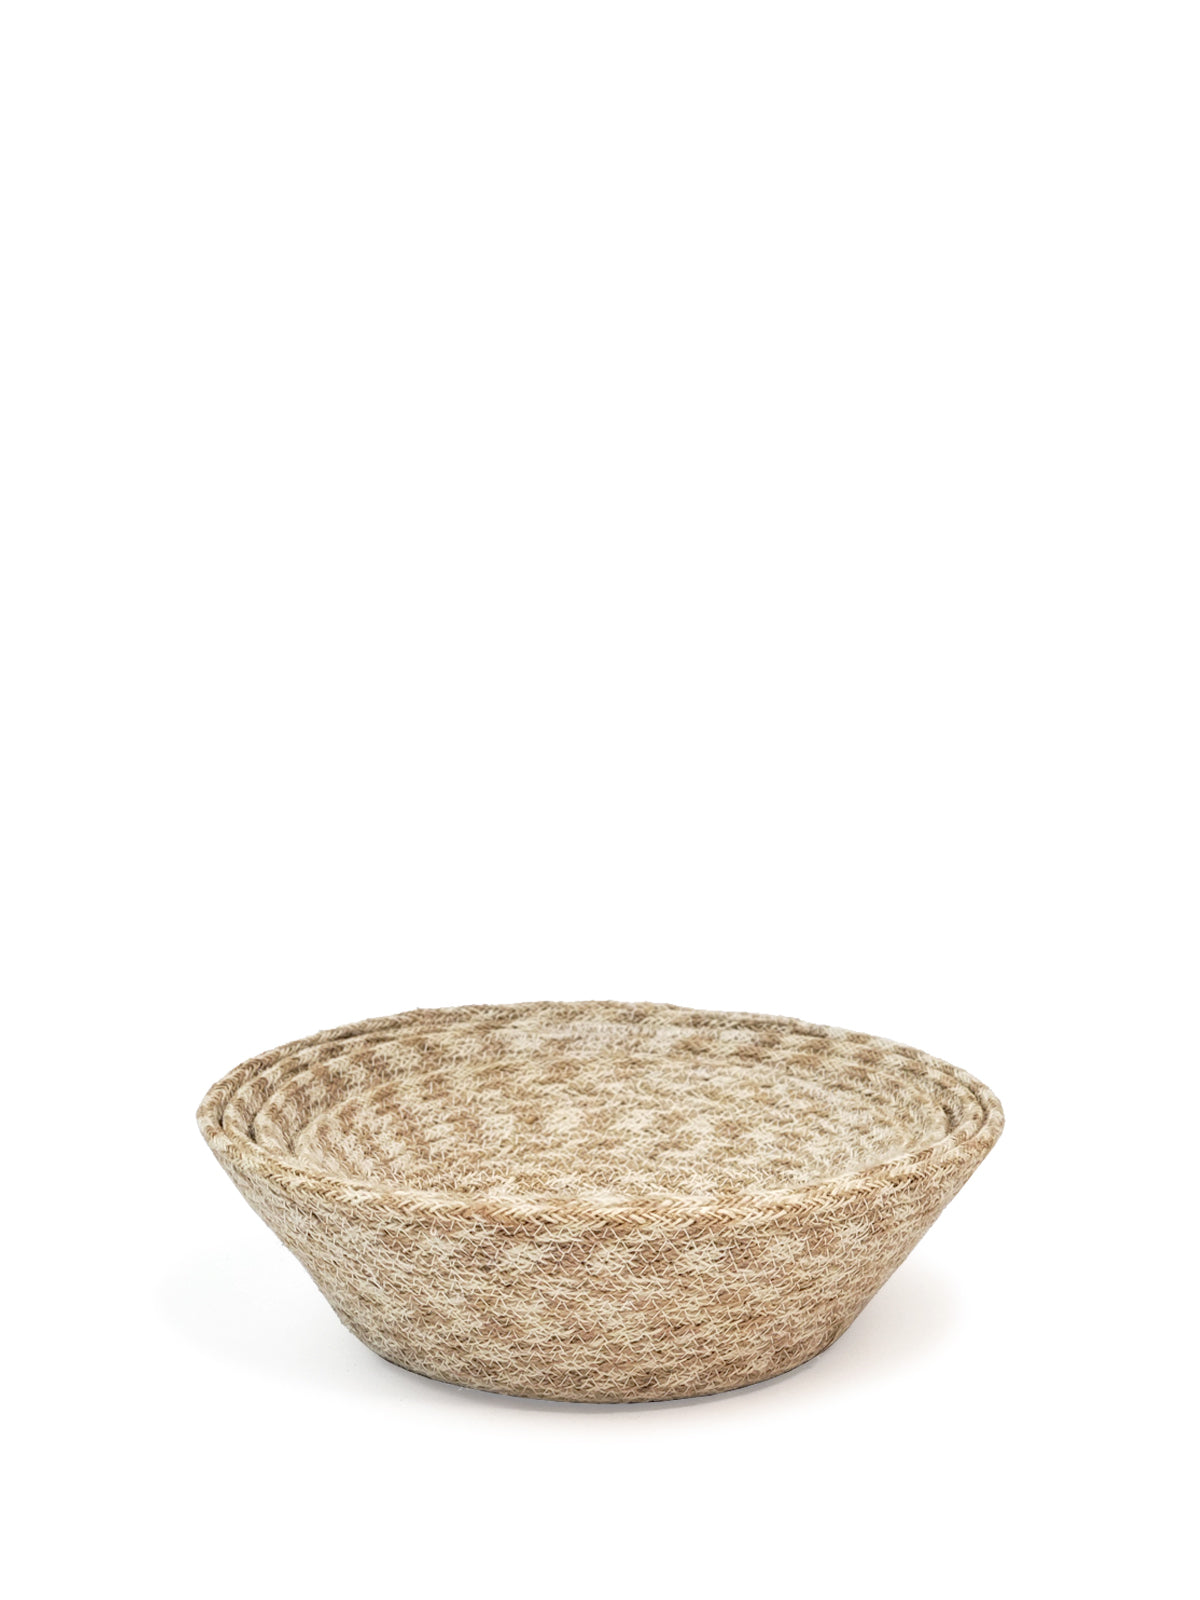 Buy Agora Woven Nesting Bowl (Set of 4) by KORISSA by KORISSA